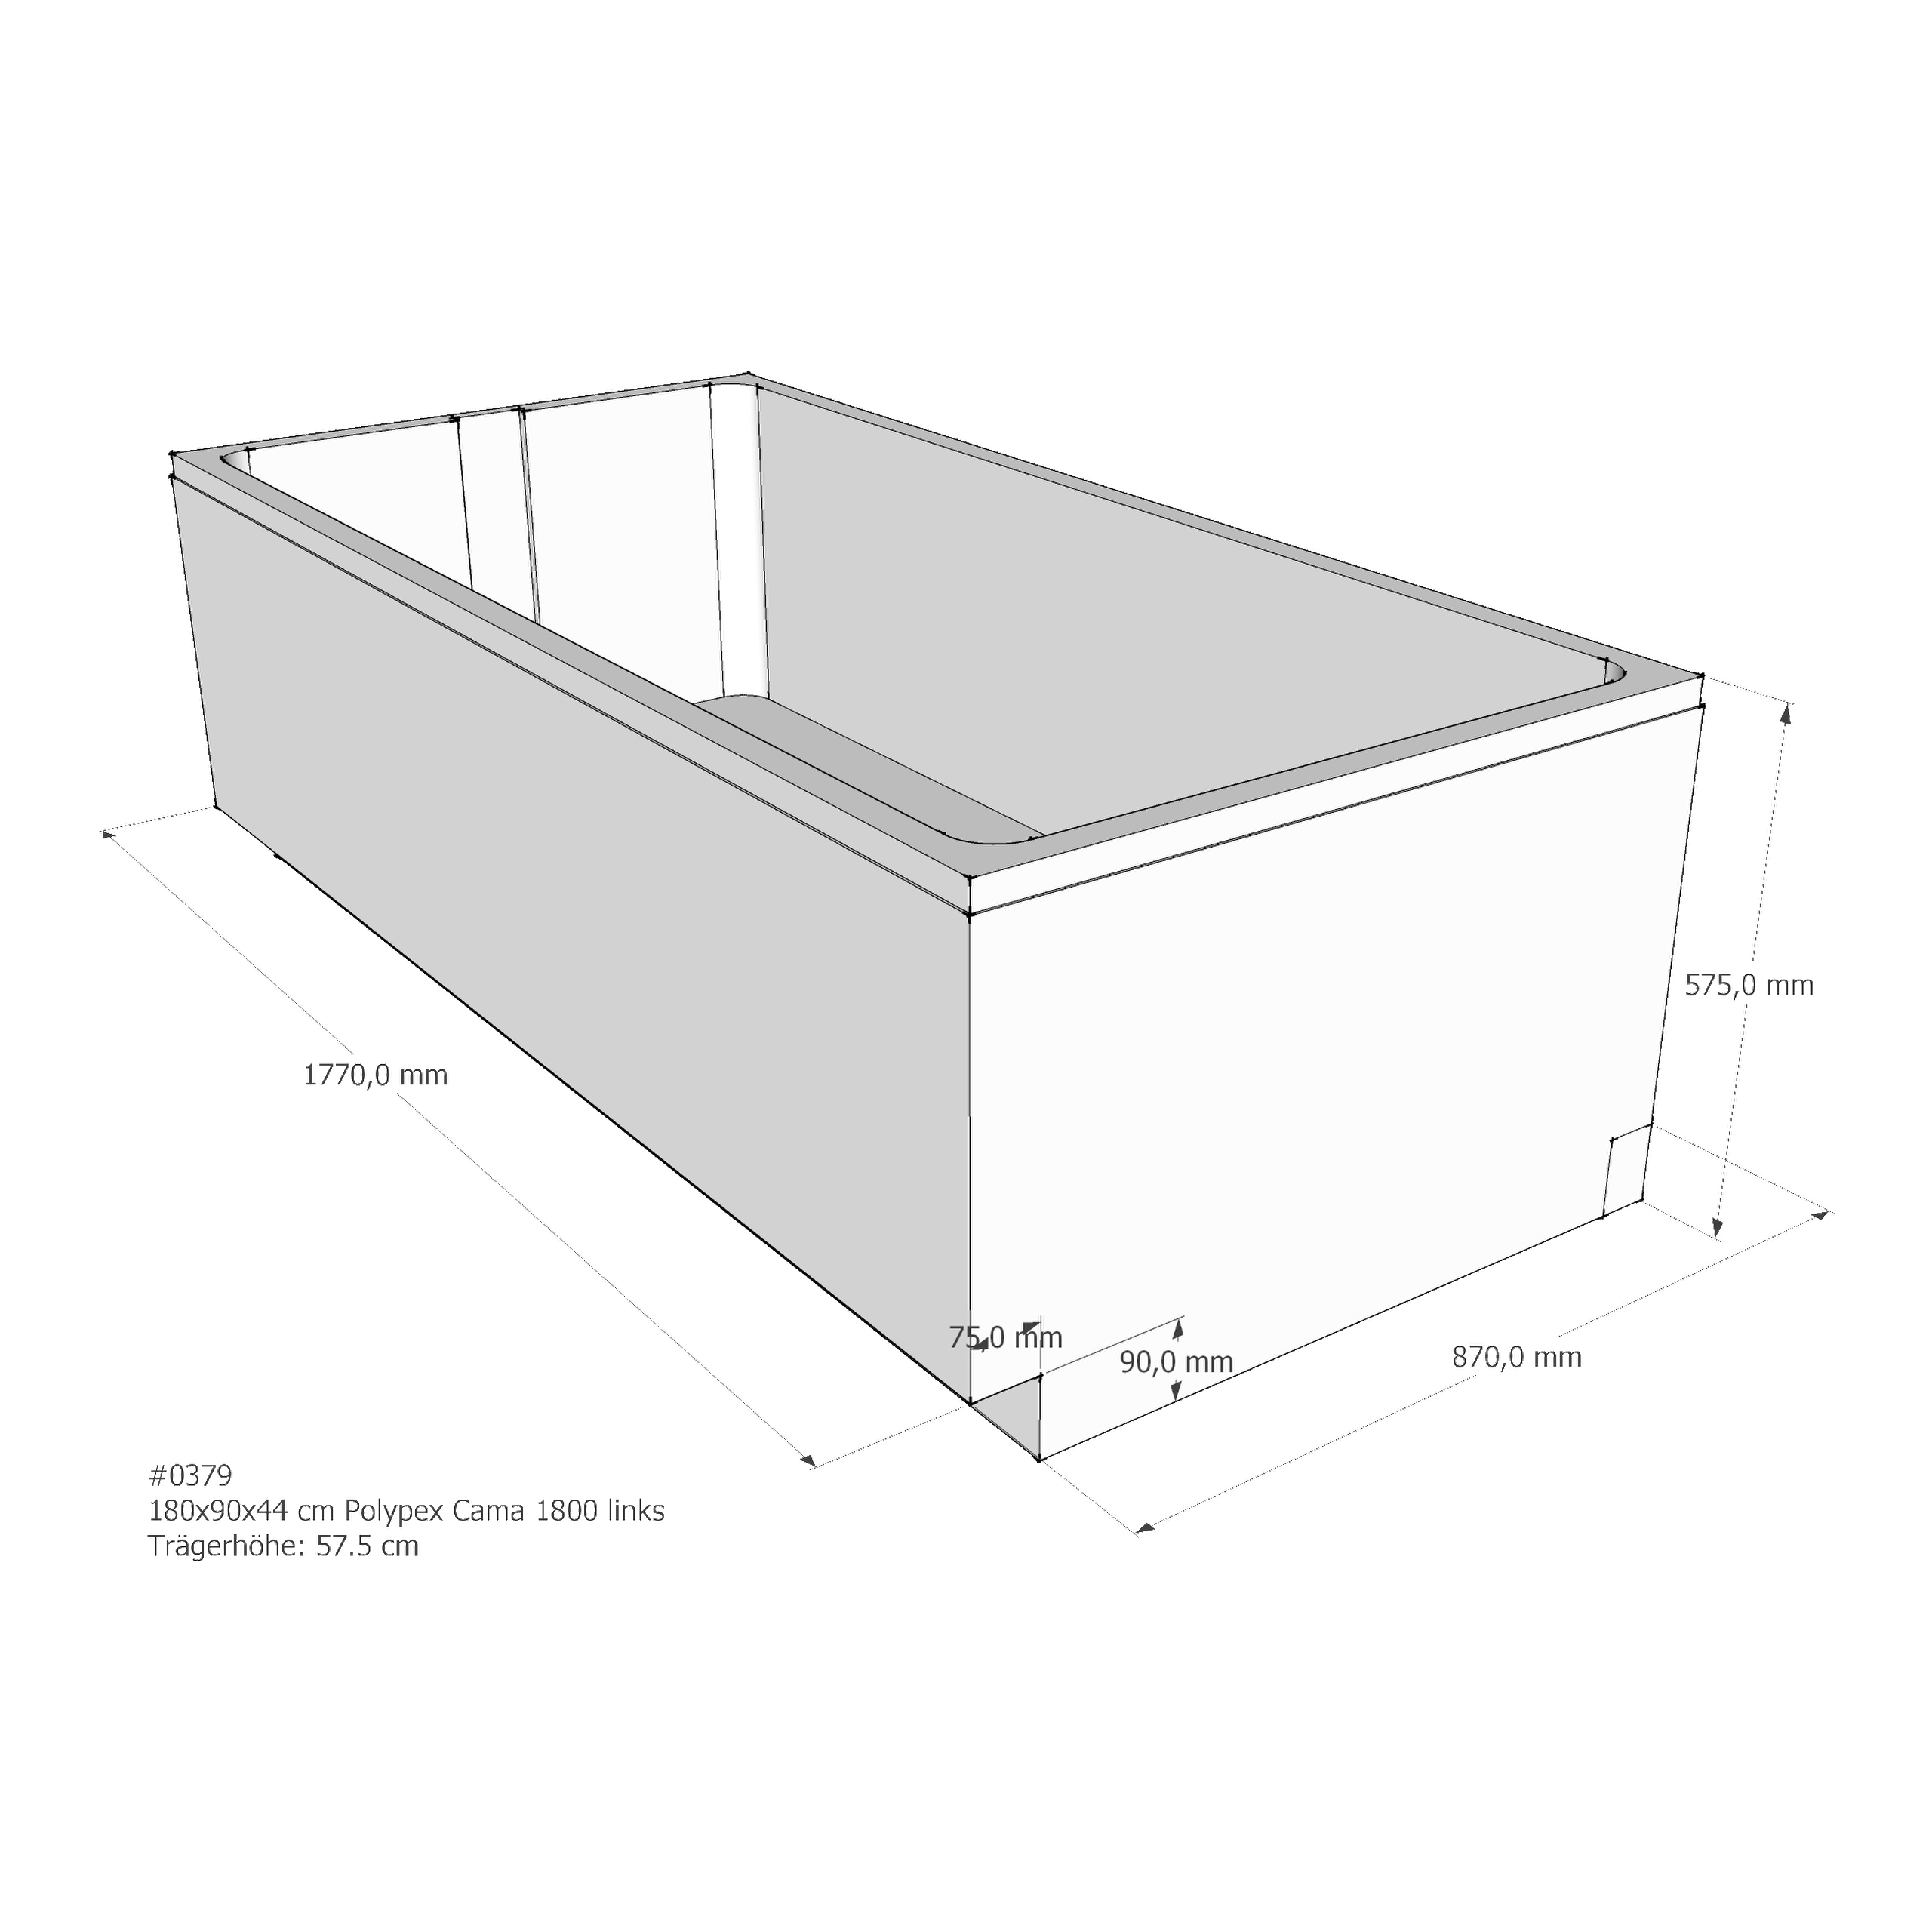 Badewannenträger für Polypex Cama 1800 links 180 × 90 × 44 cm